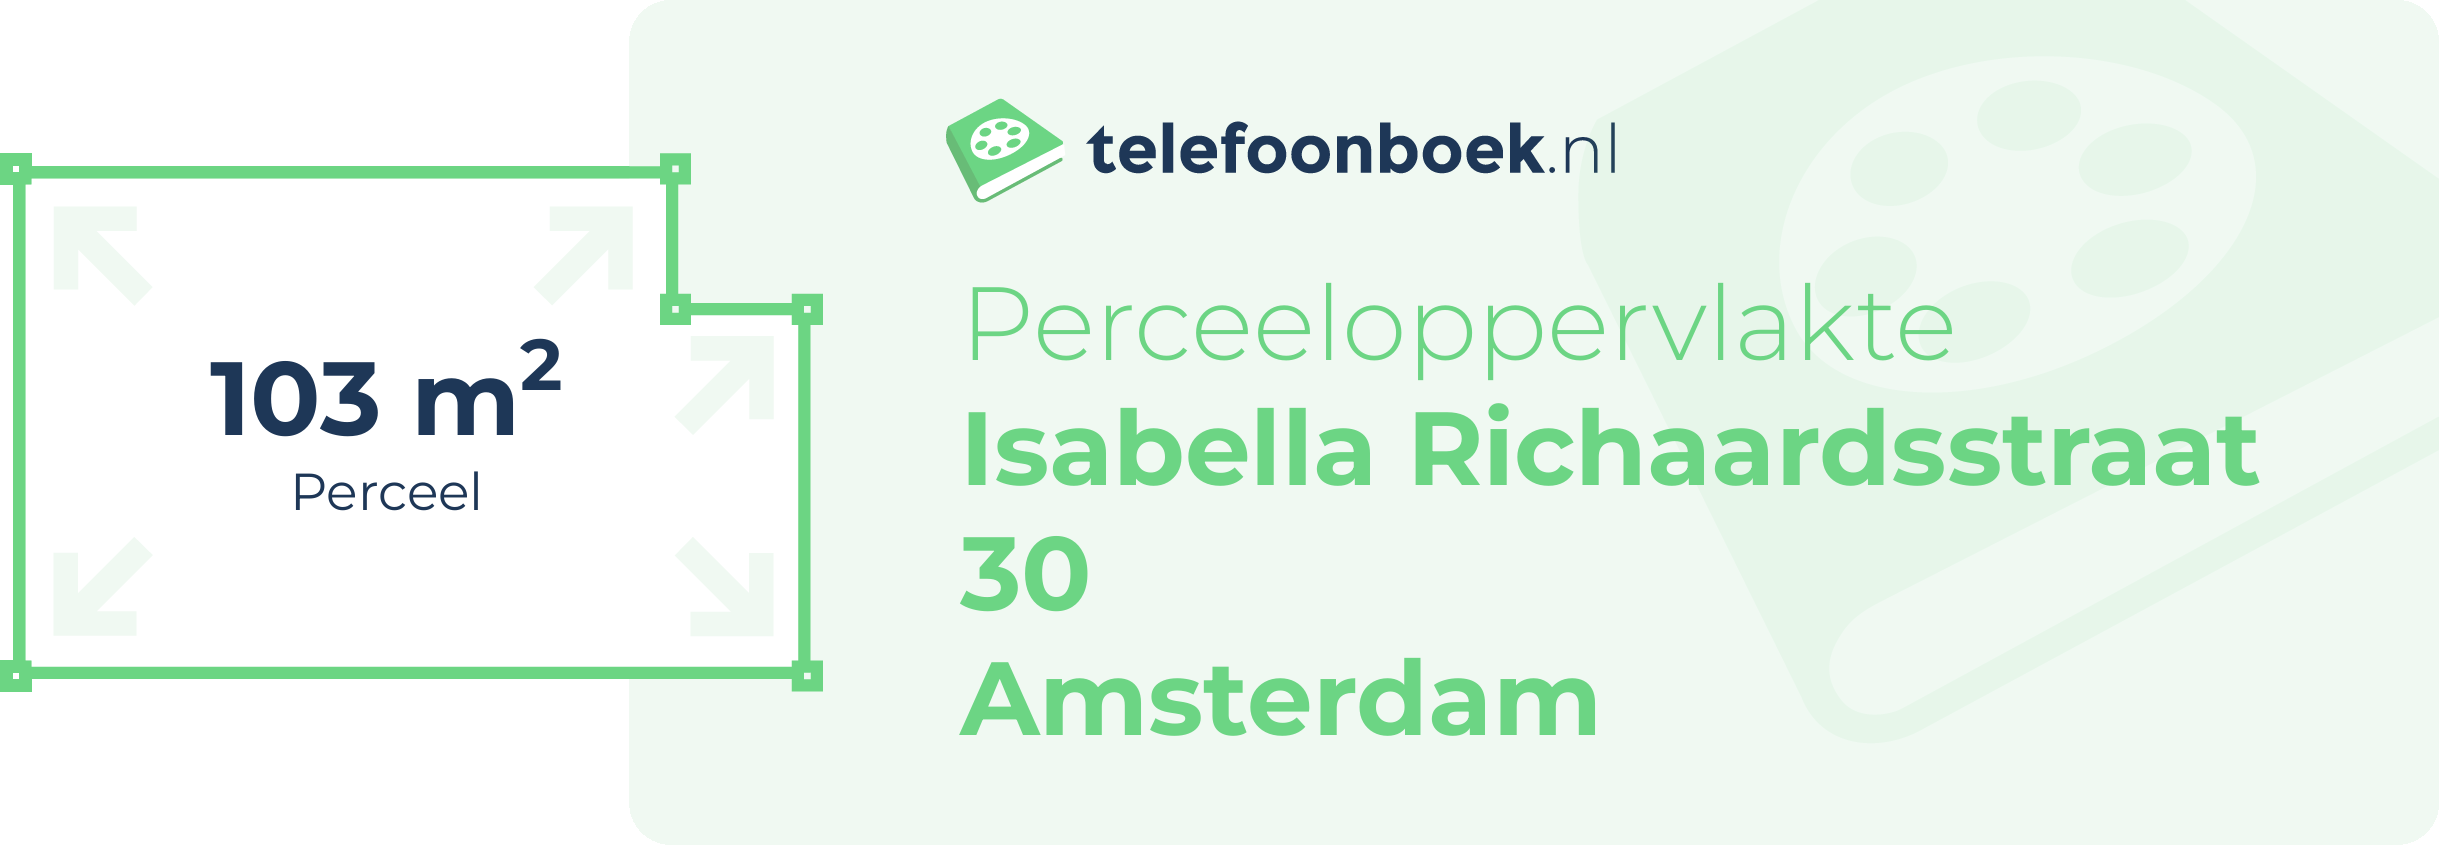 Perceeloppervlakte Isabella Richaardsstraat 30 Amsterdam